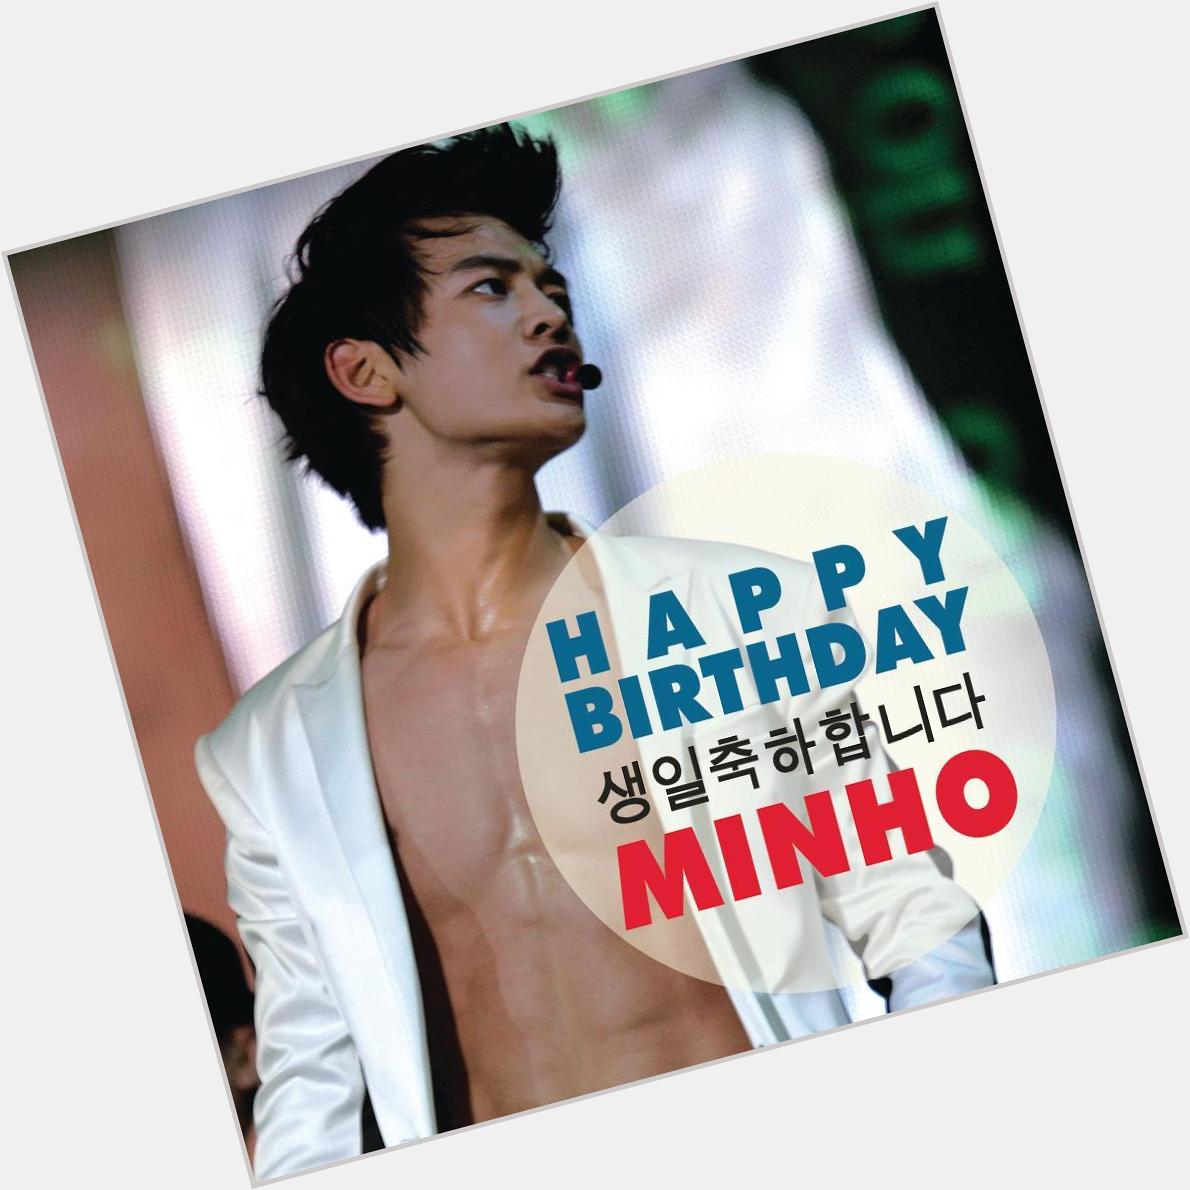 Happy birthday buat suami RL t-ae, Choi Minho! I love you minho oppa and happy birthday for all minhos RP^^ 